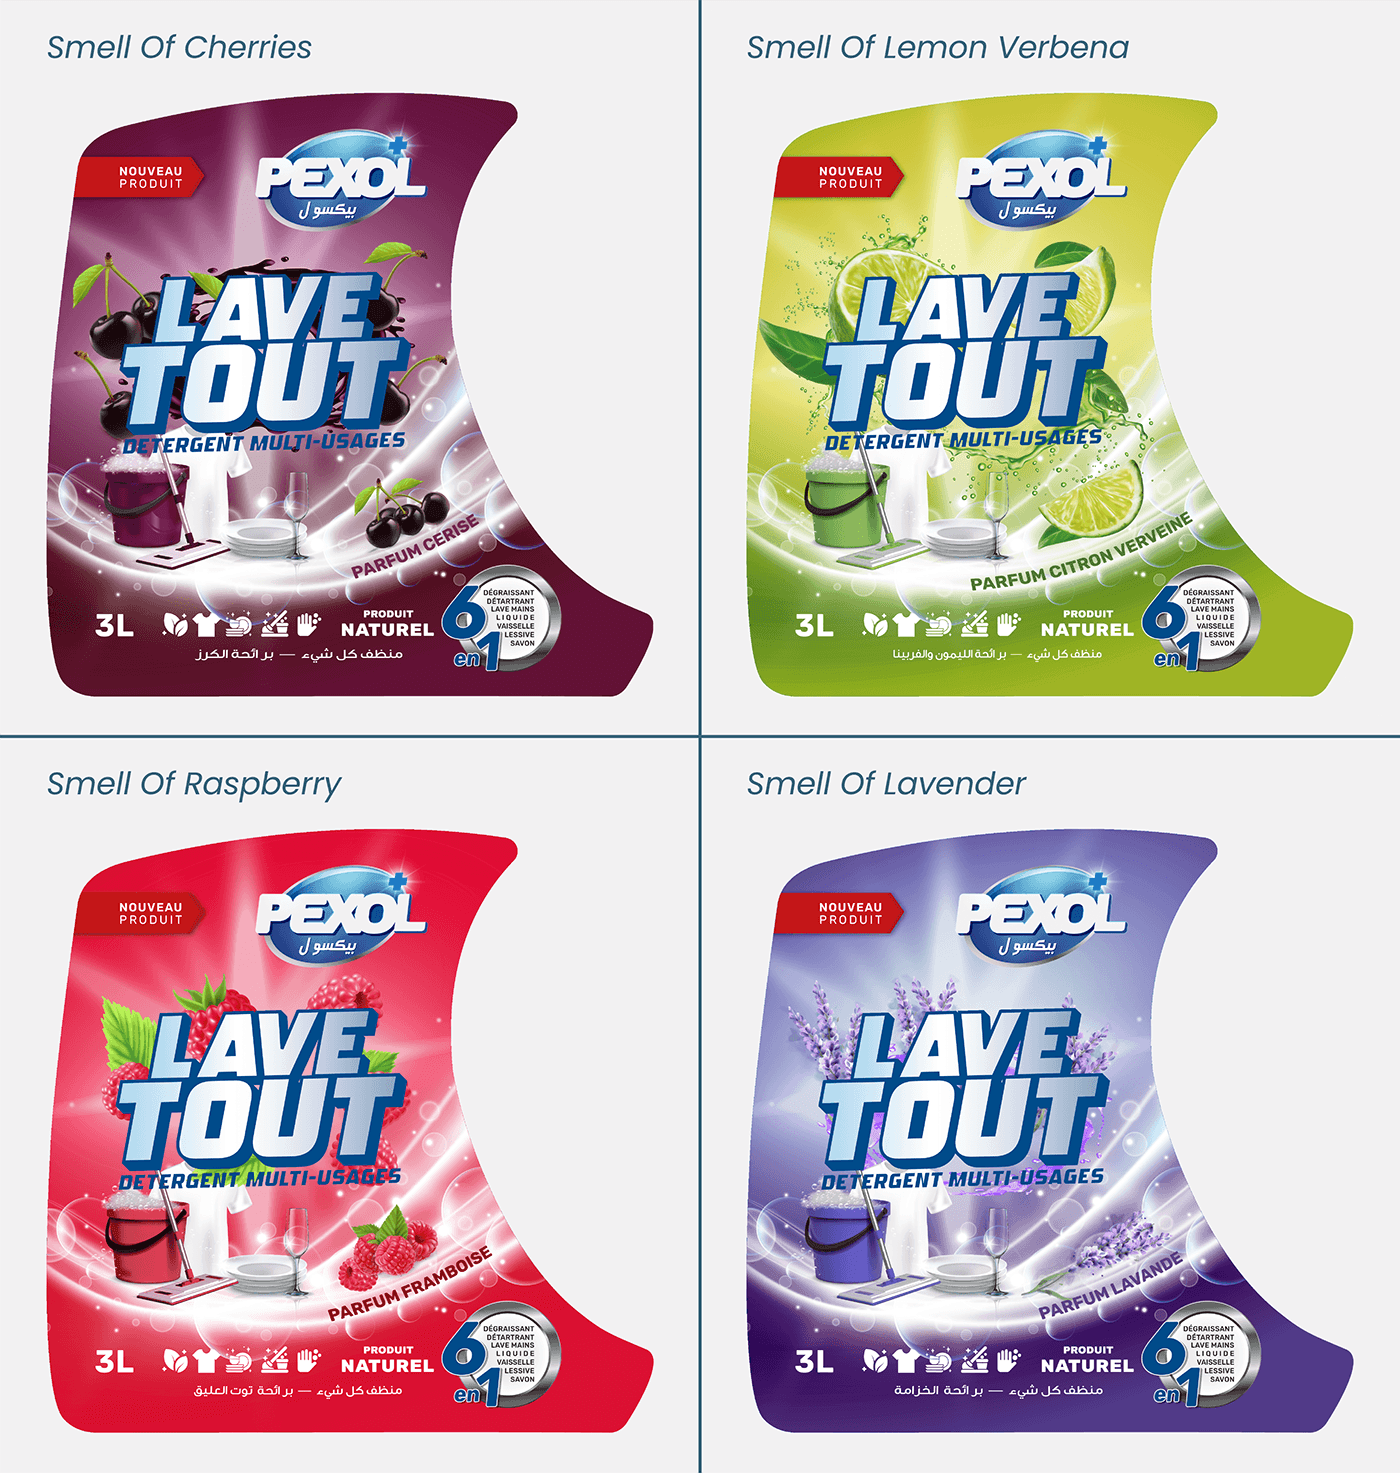 Packaging detergent label design Advertising 